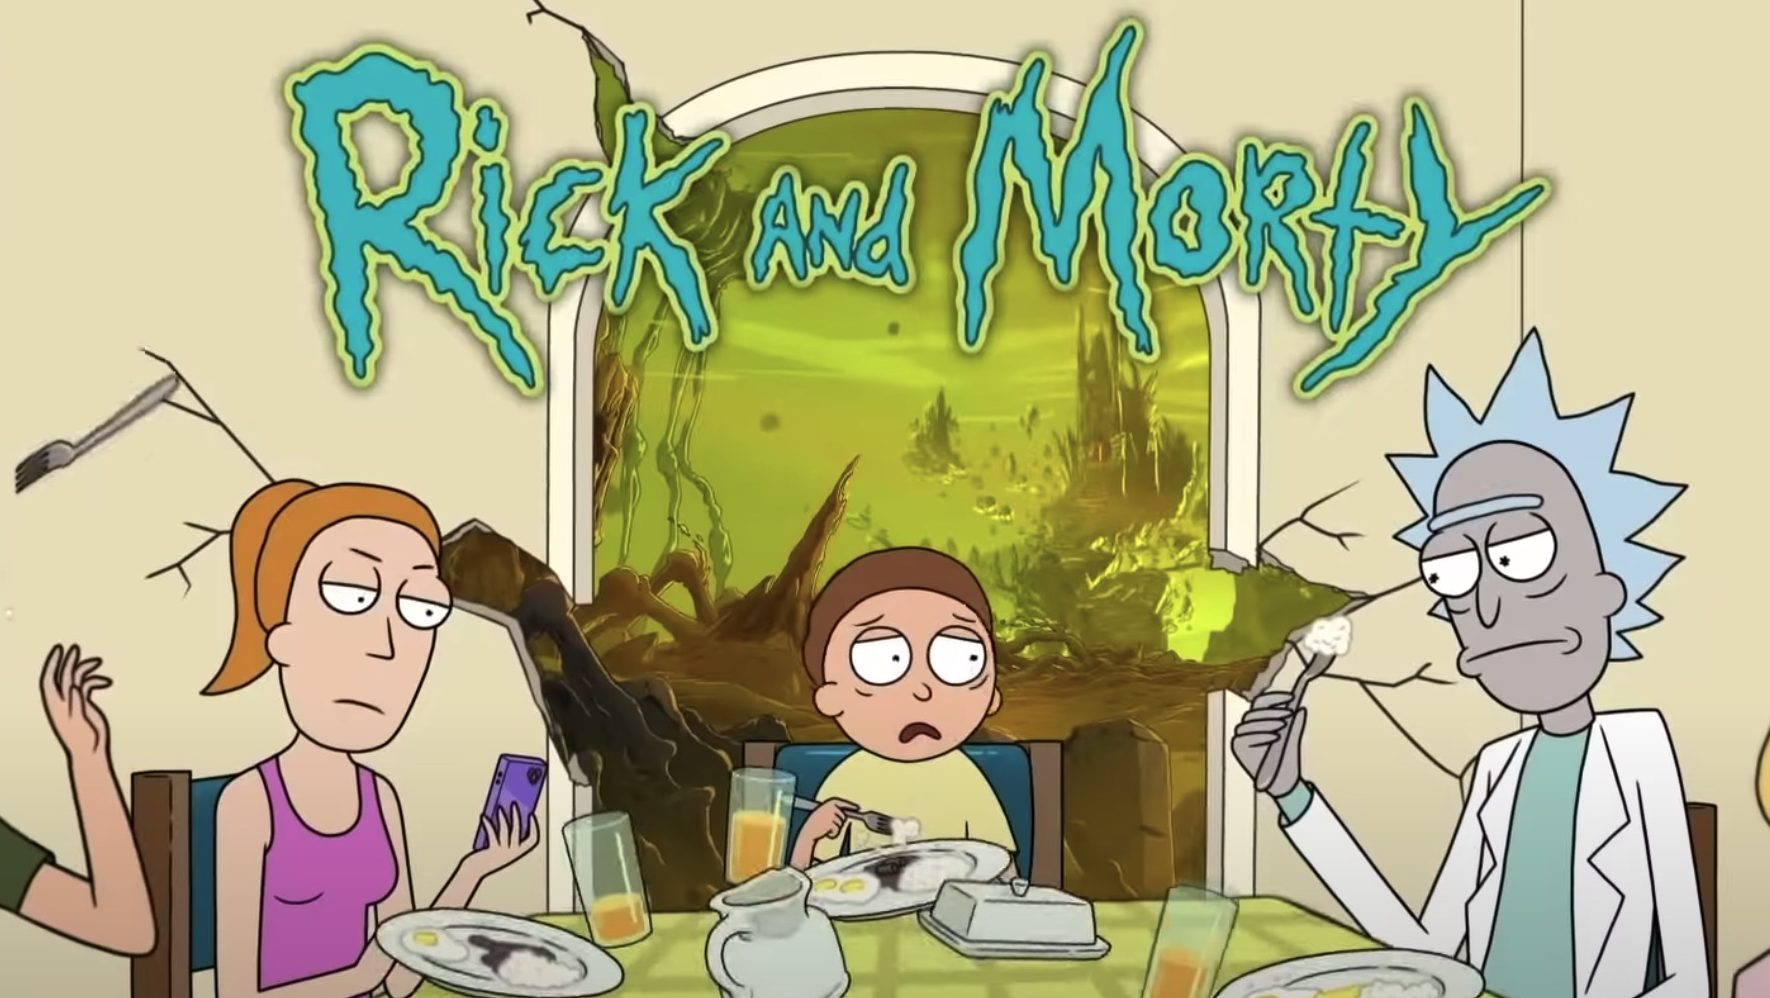 Rick and morty season 1 full episodes kisscartoon